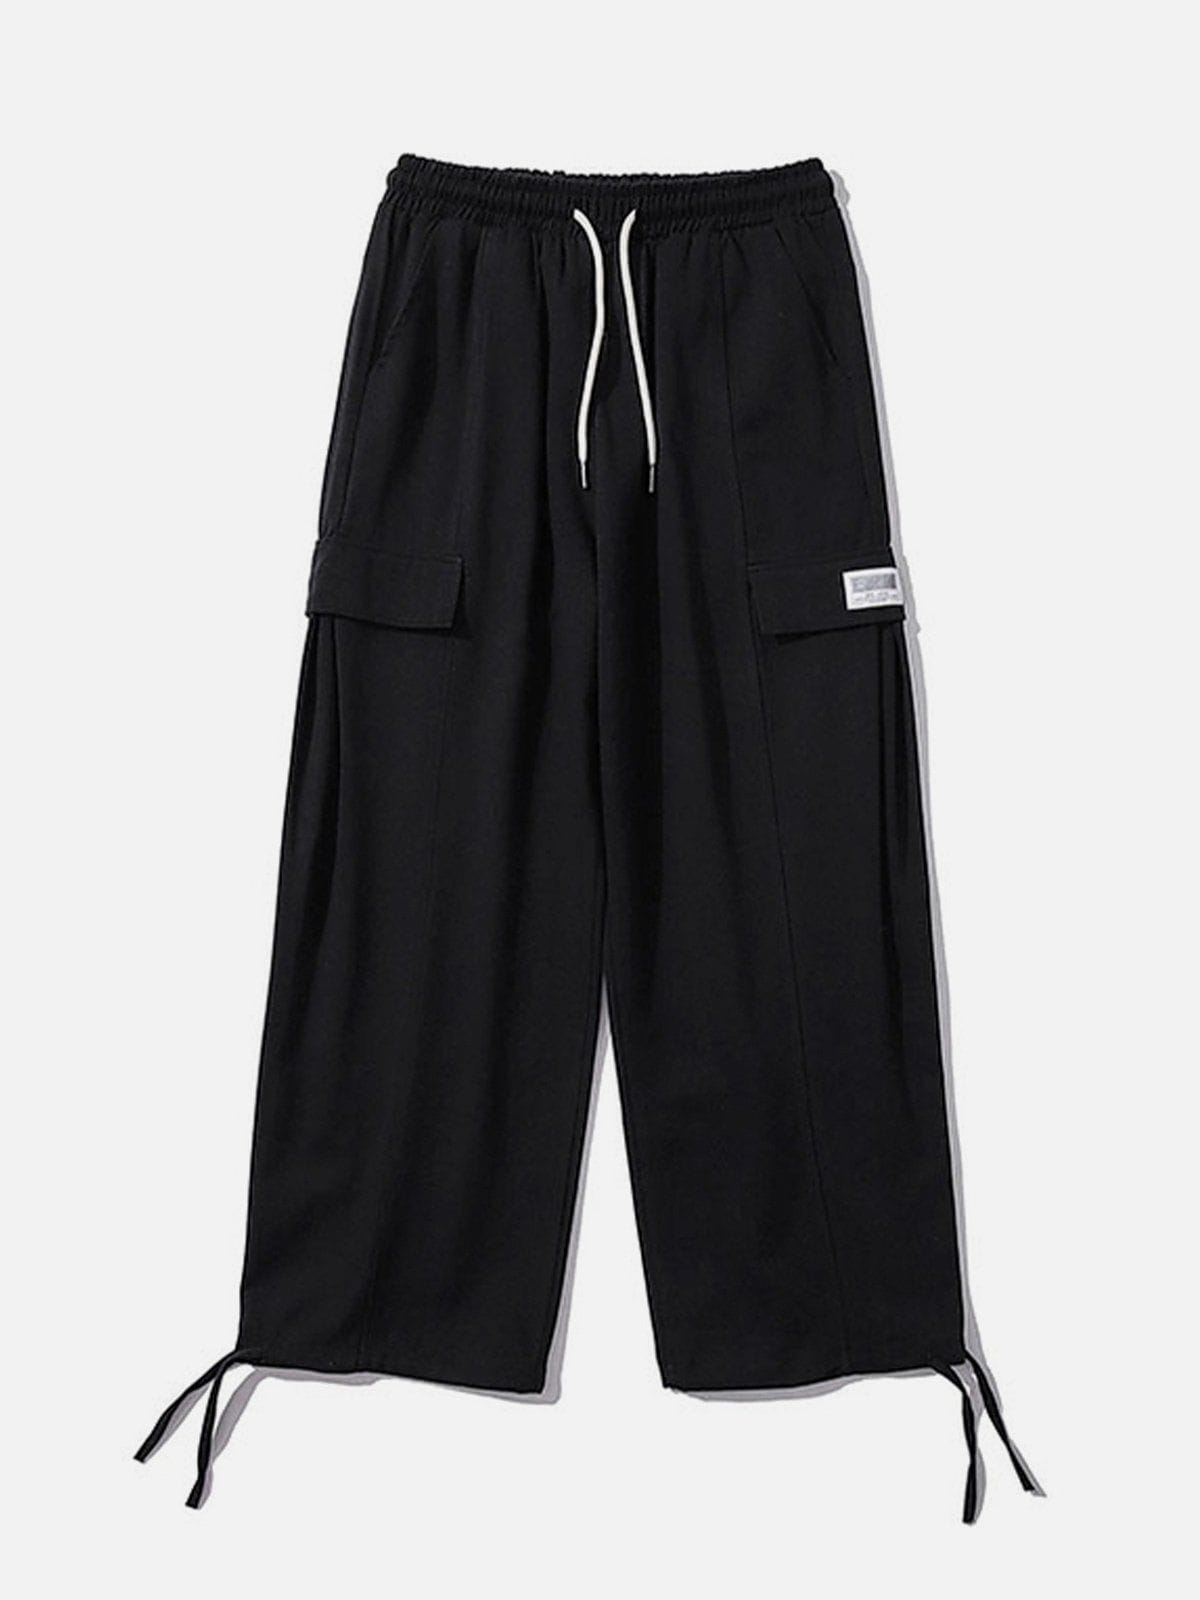 Eprezzy® - Large Pocket Drawstring Cargo Pants Streetwear Fashion - eprezzy.com